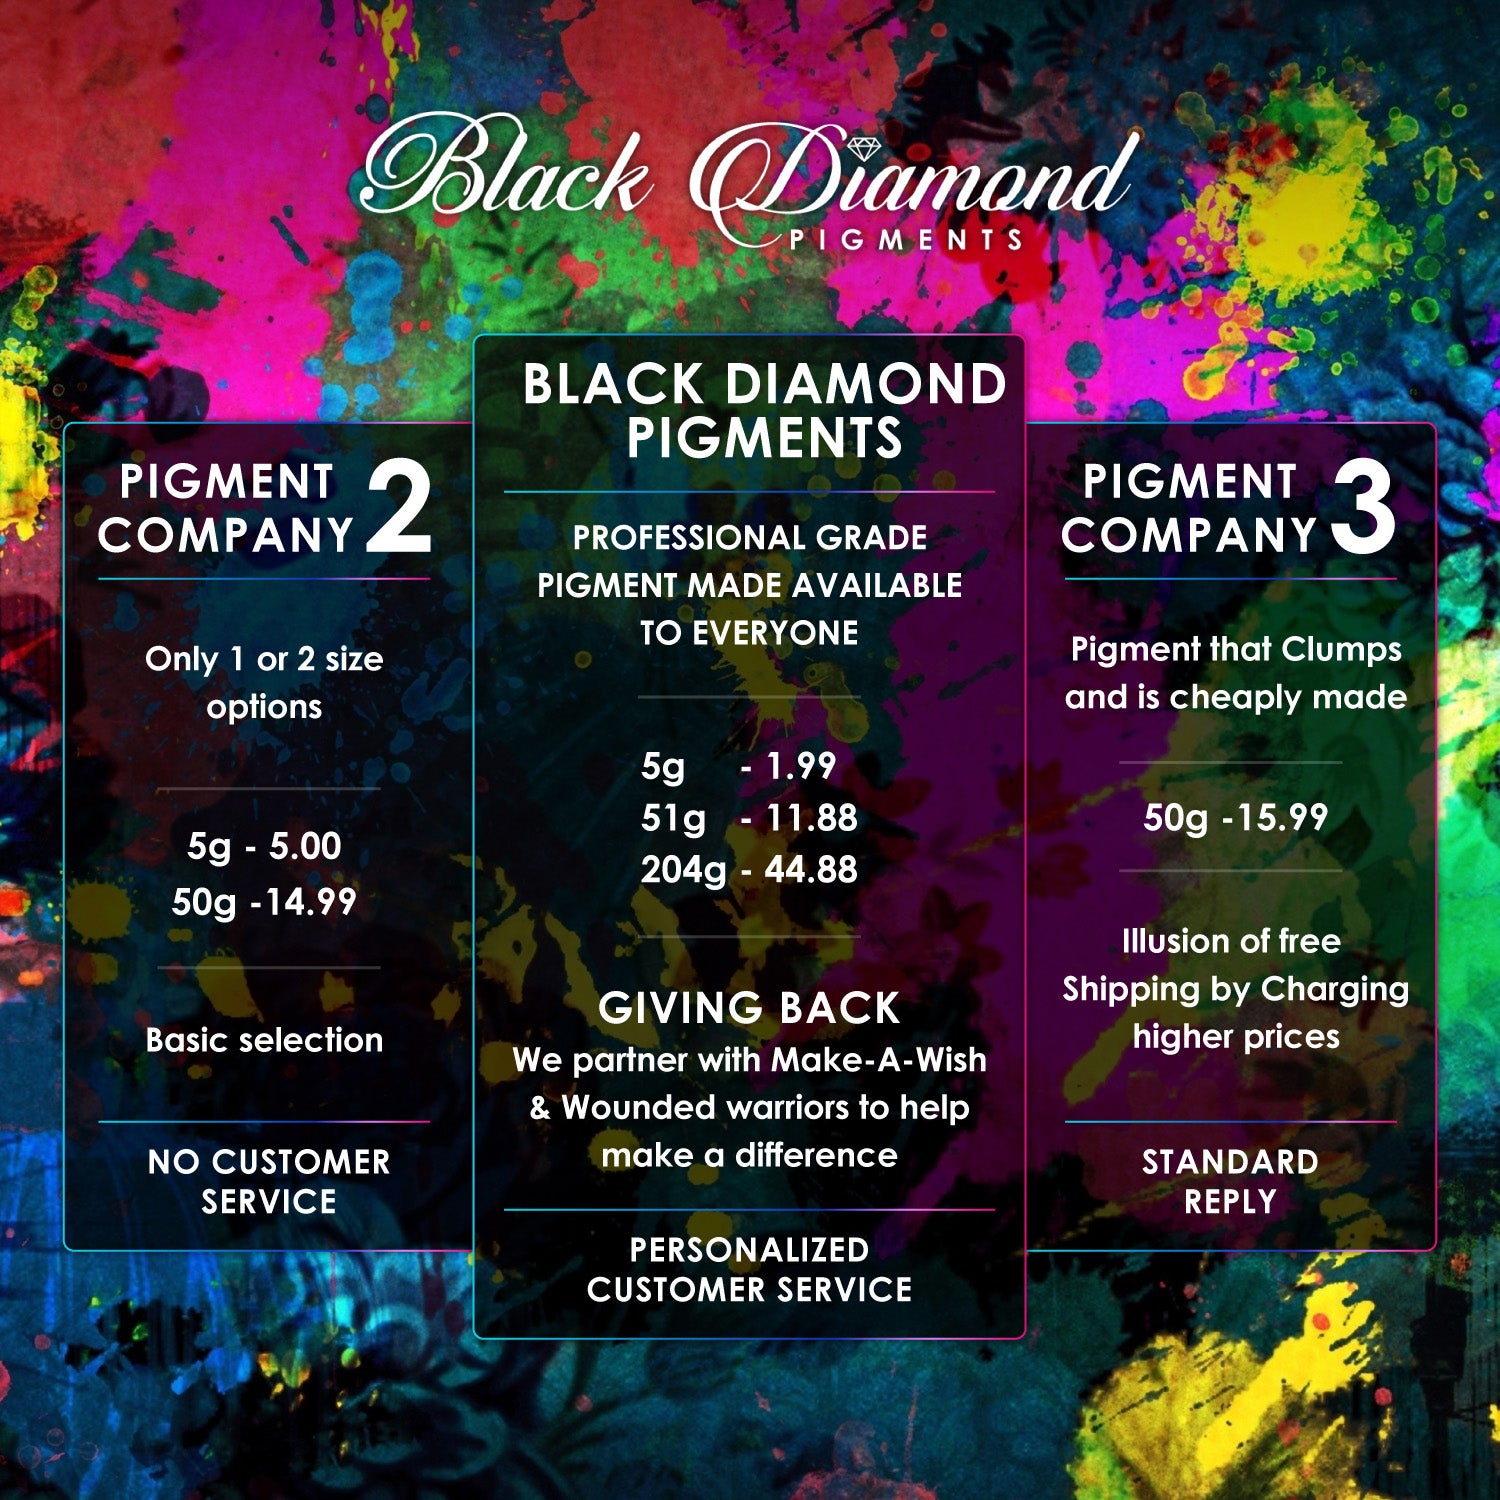 "COTTON CANDY" Black Diamond Pigments